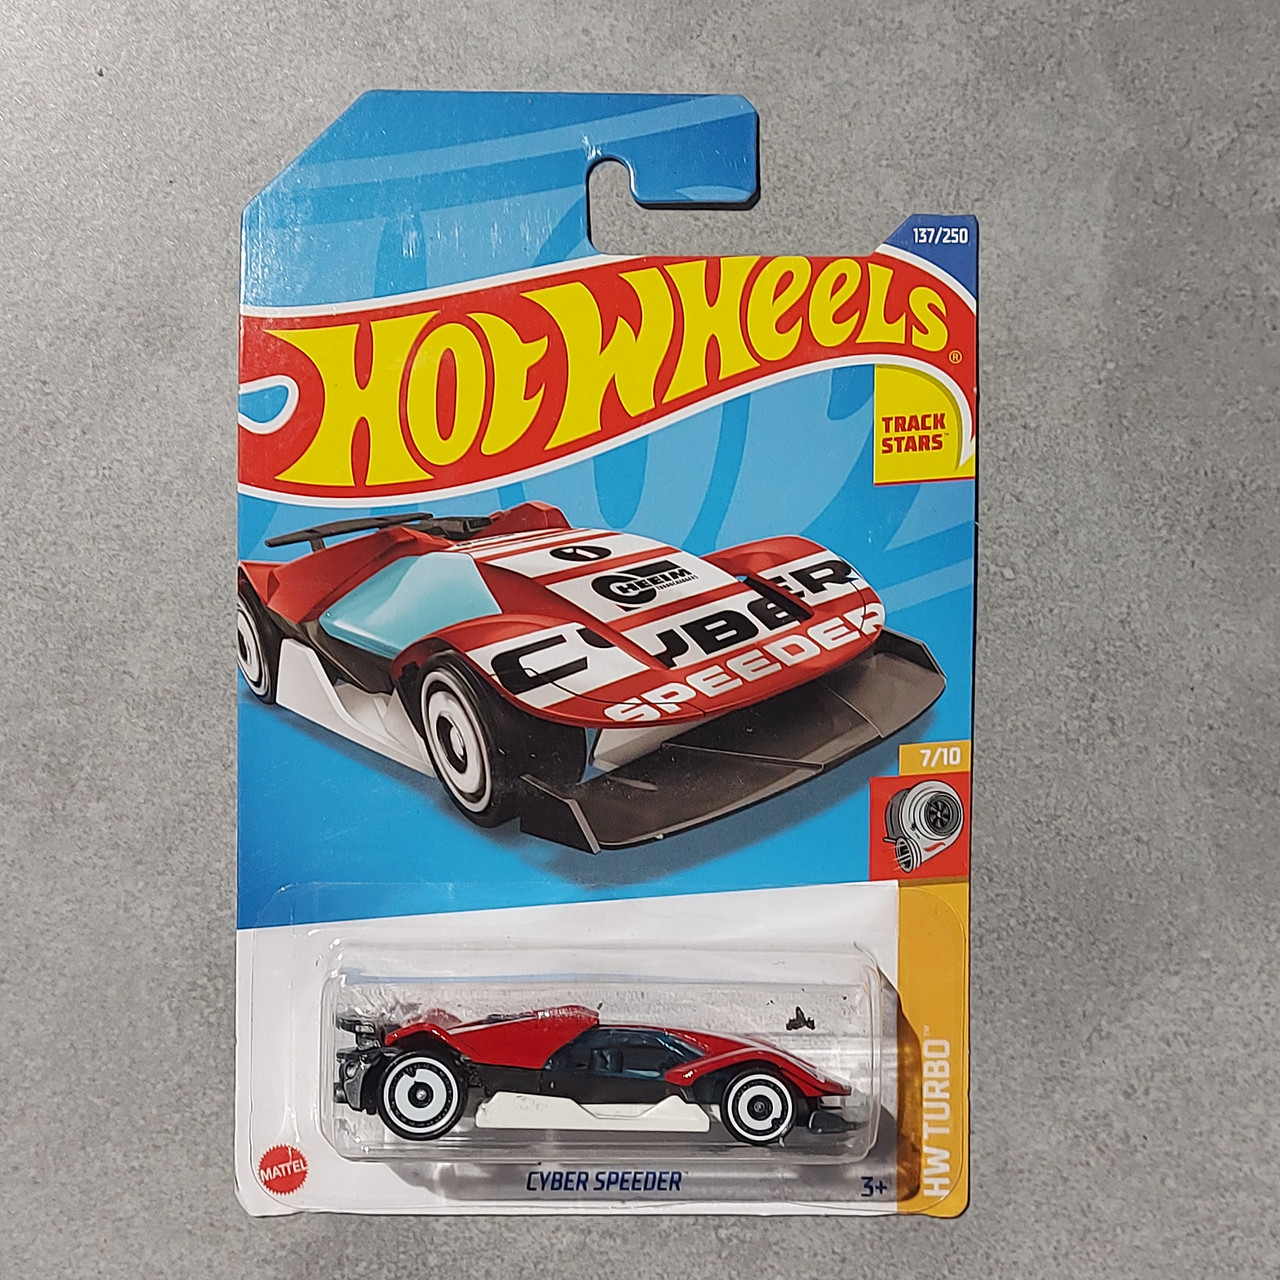 Оригинальная Машинка "Hot wheels" CYBER SPEEDER. HW TURBO. Mattel. 137/250. Хотвилс. Машинки. Подарок.